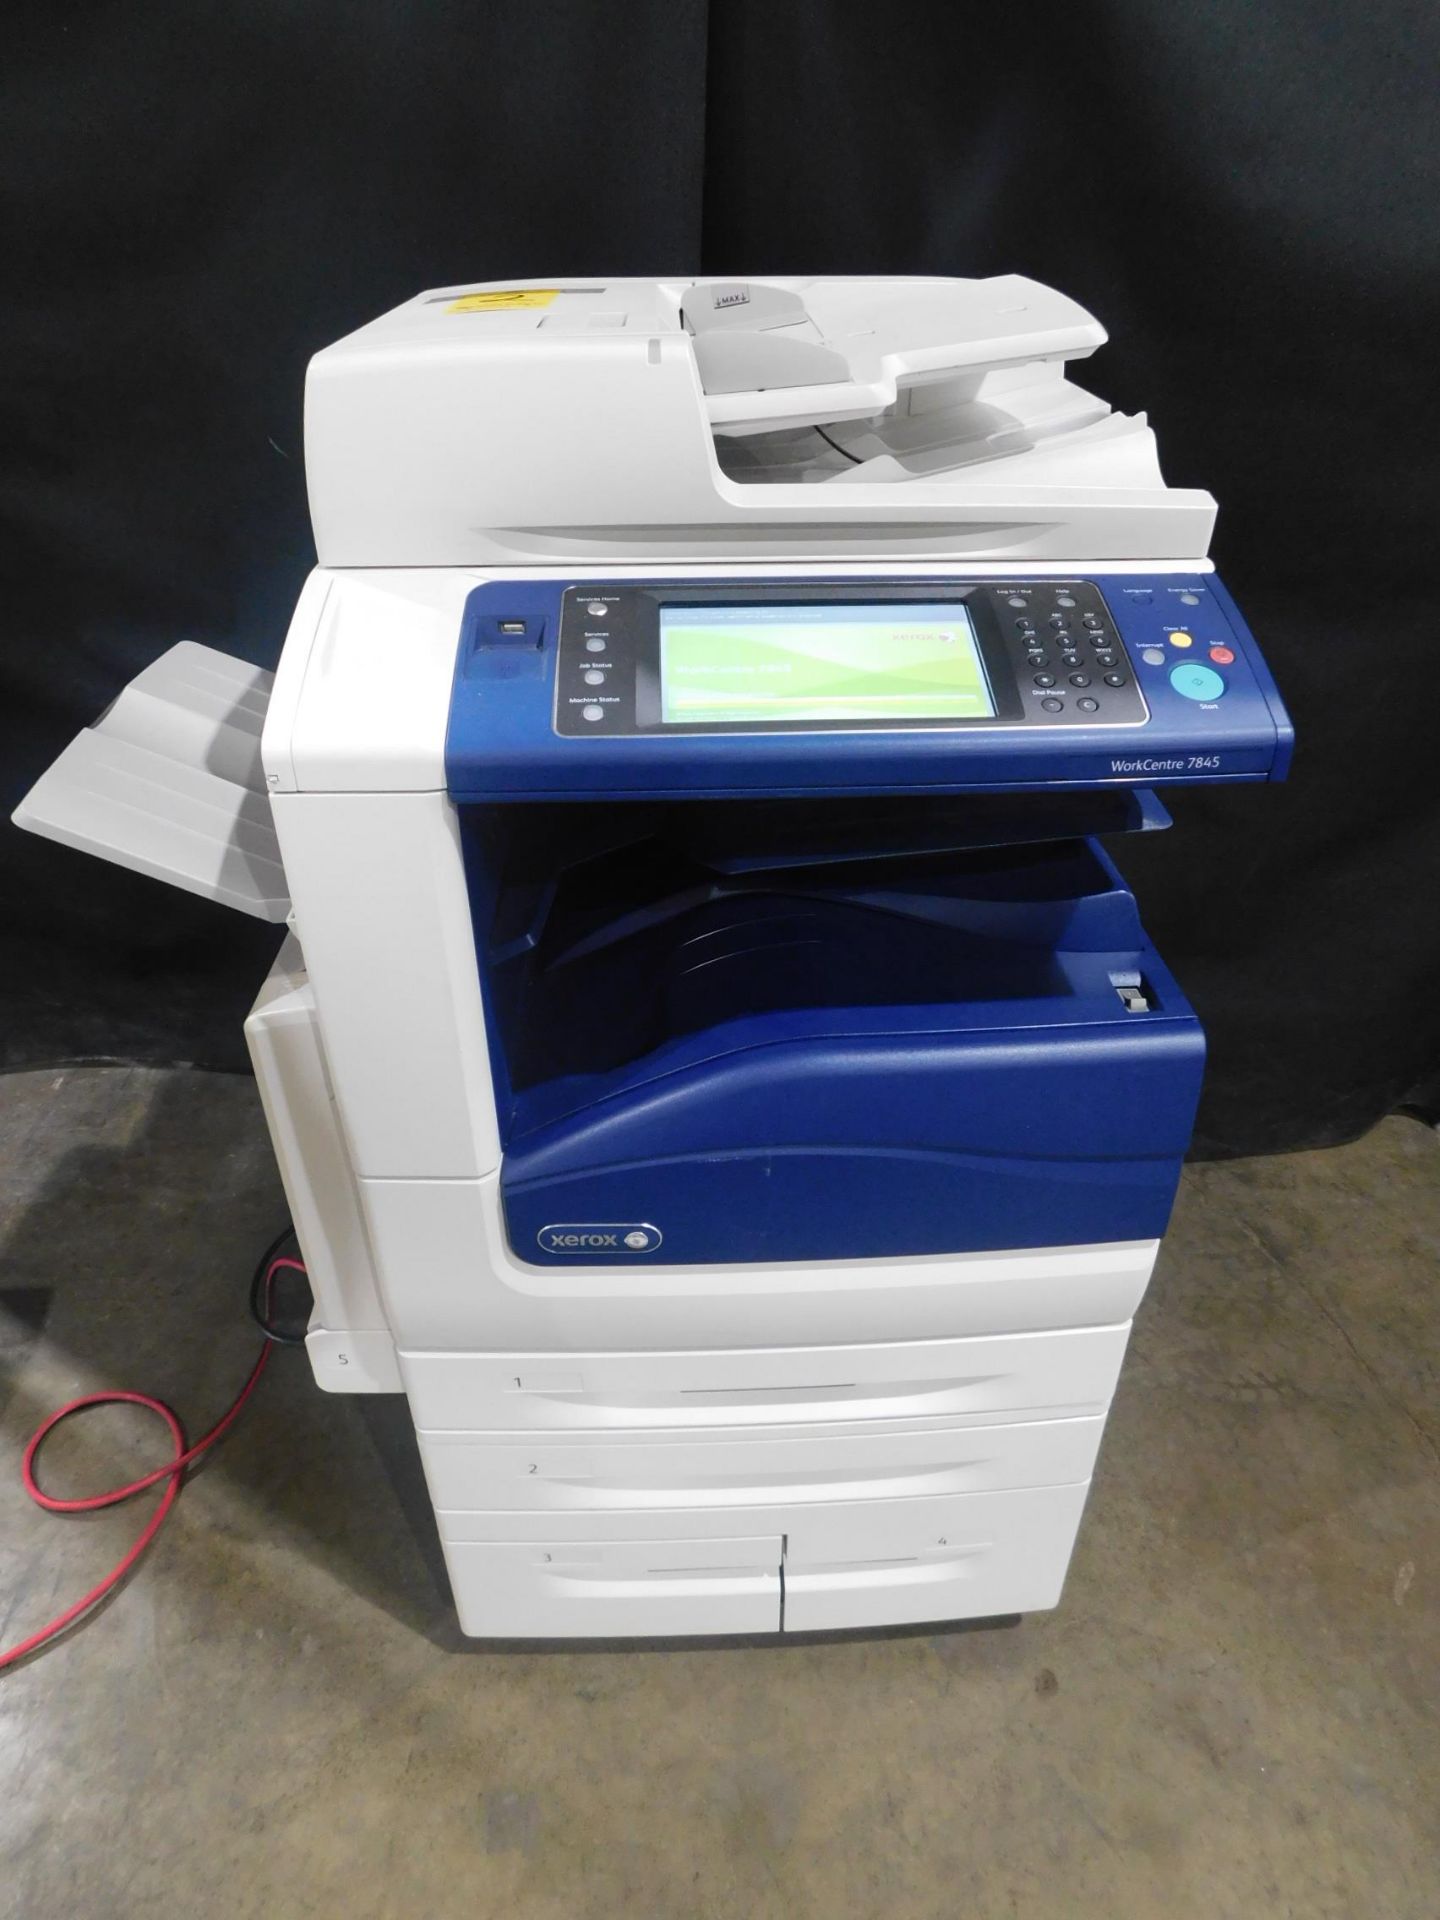 Xerox Work Centre 7845 Multifunction Color Copier/Printer, SN MX4734146, Total Impressions: 376,162,